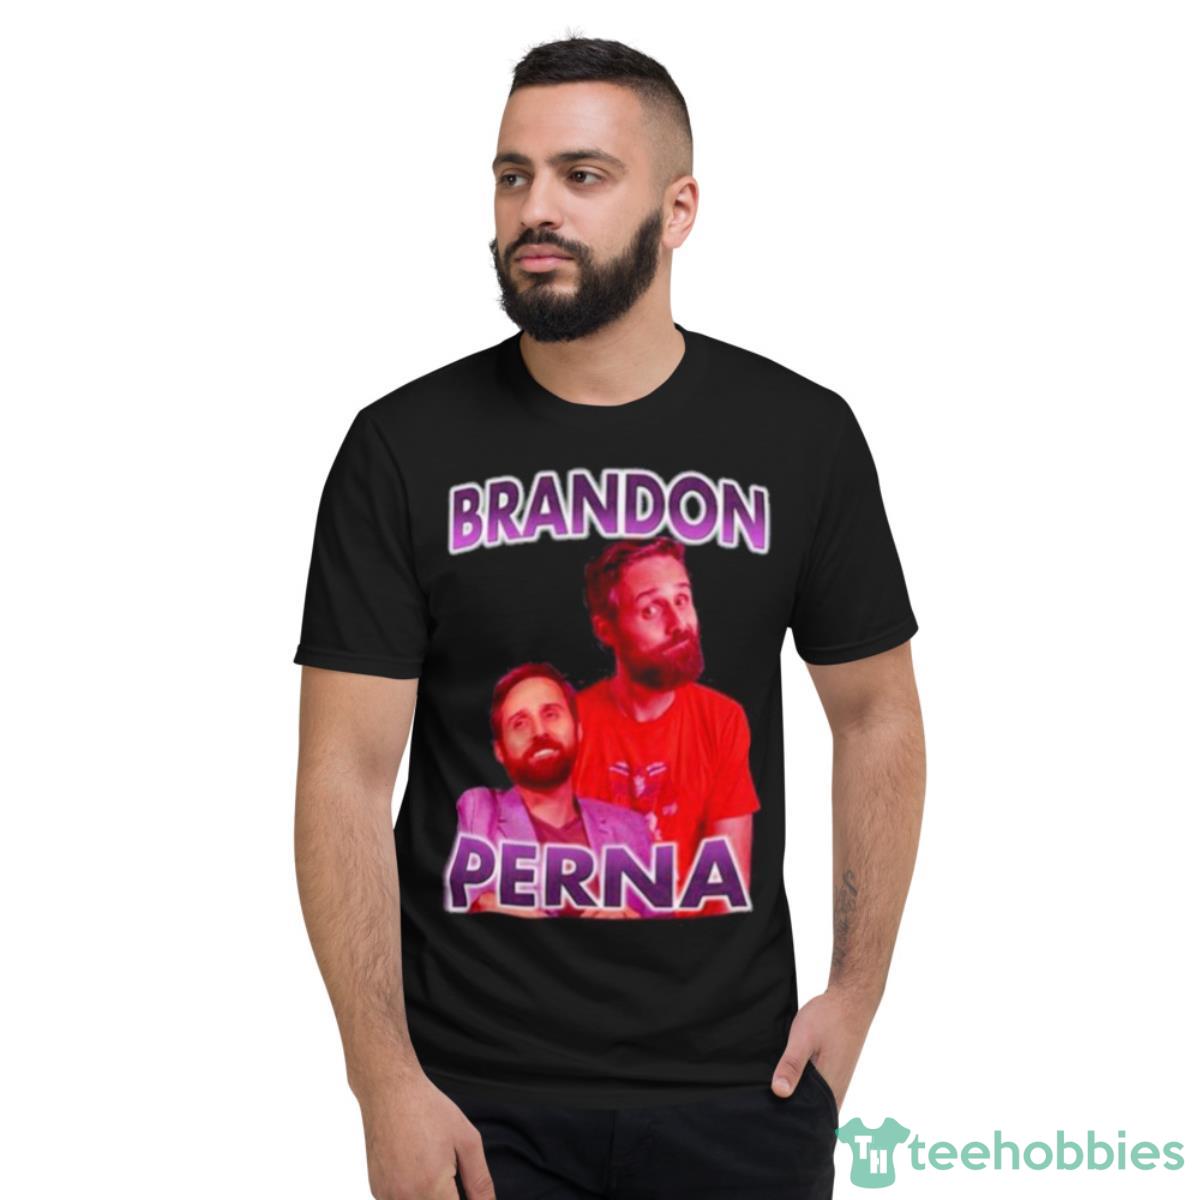 Brandon Perna Tee Tom Grossi Shirt - Short Sleeve T-Shirt